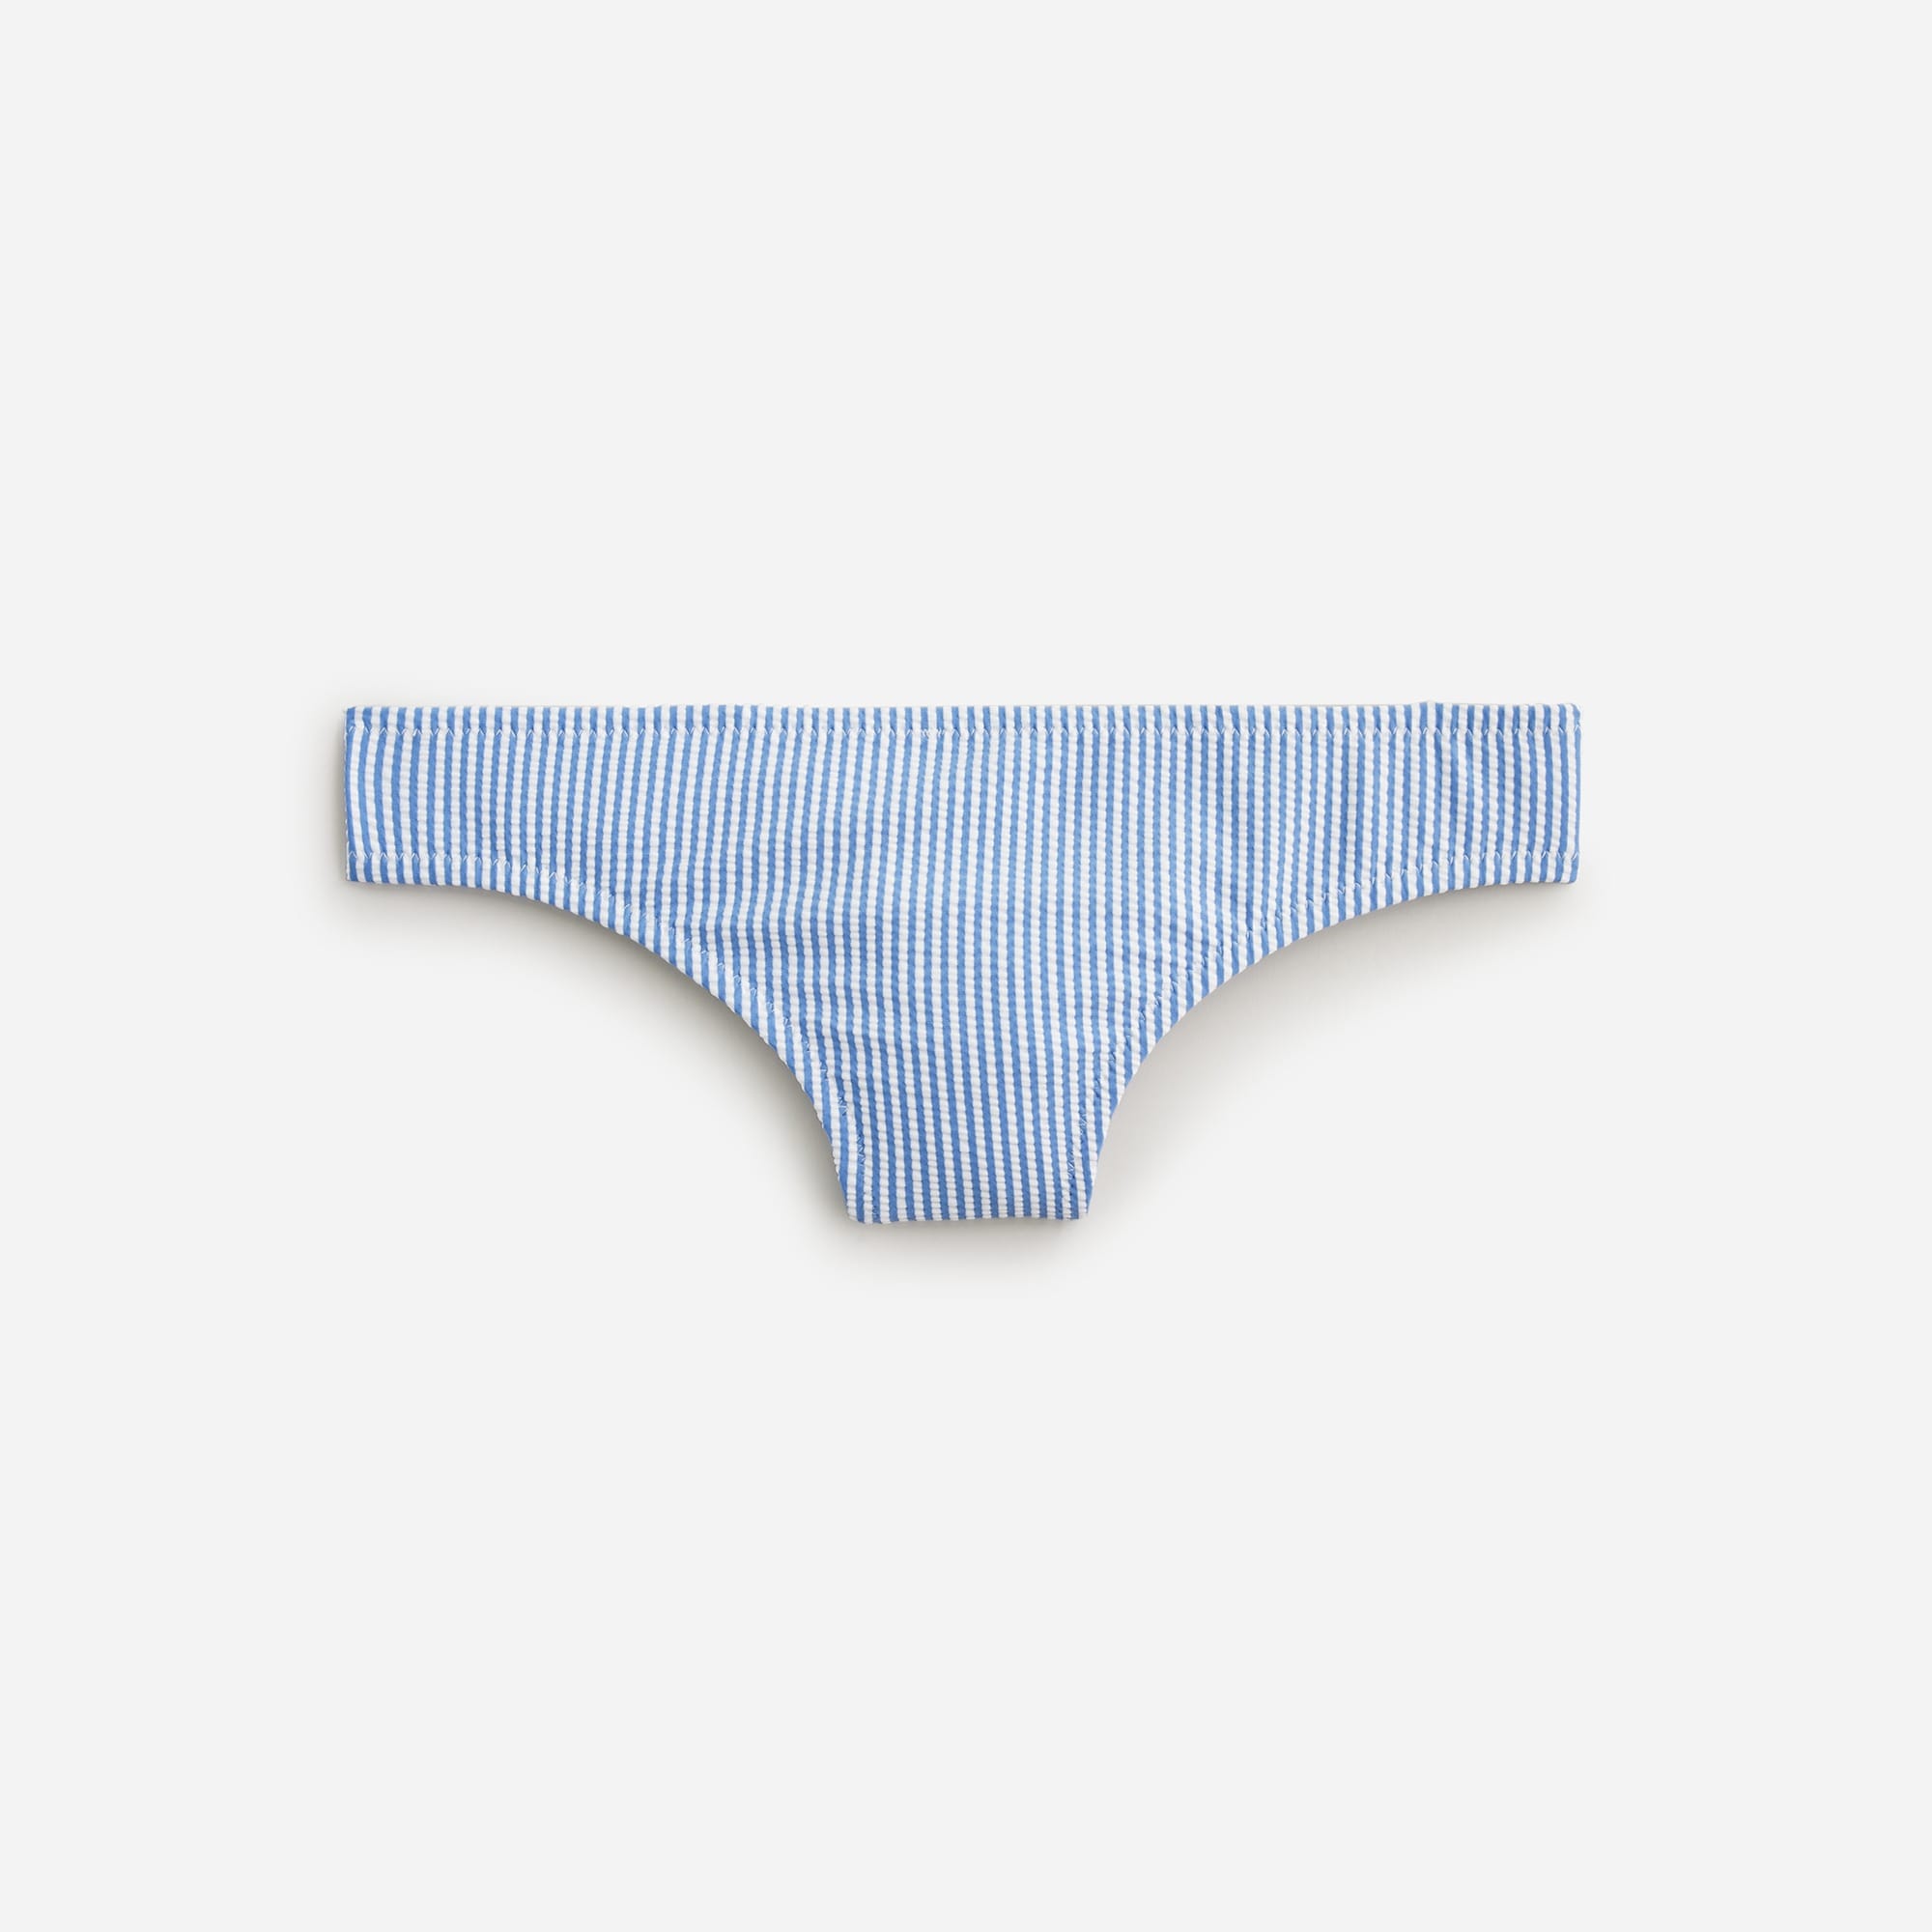  Hipster full-coverage bikini bottom in seersucker stripe